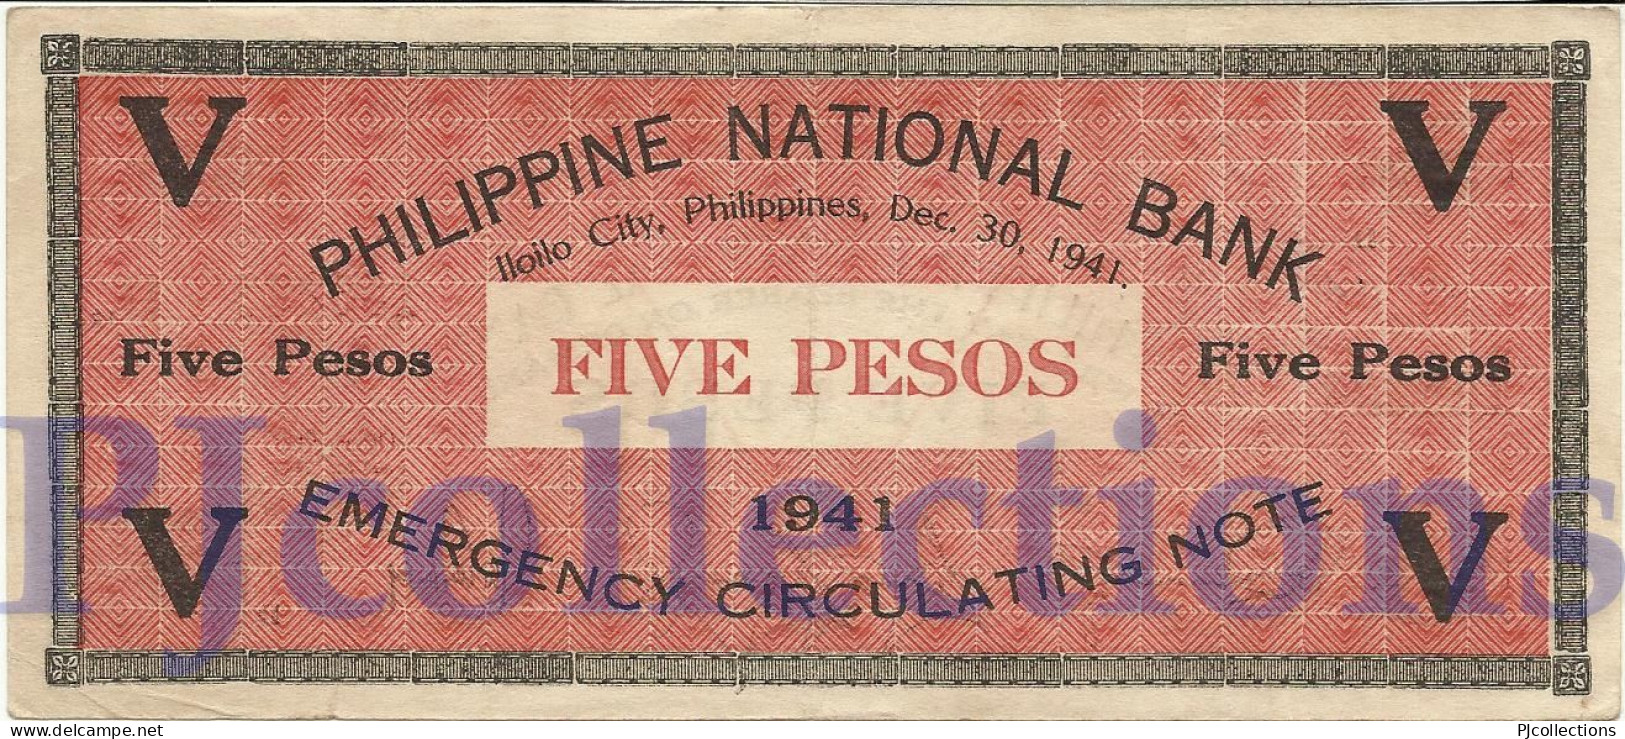 PHILIPPINES 5 PESOS 1941 PICK S307 AU W/GRAFFITI EMERGENCY BANKNOTE - Philippinen